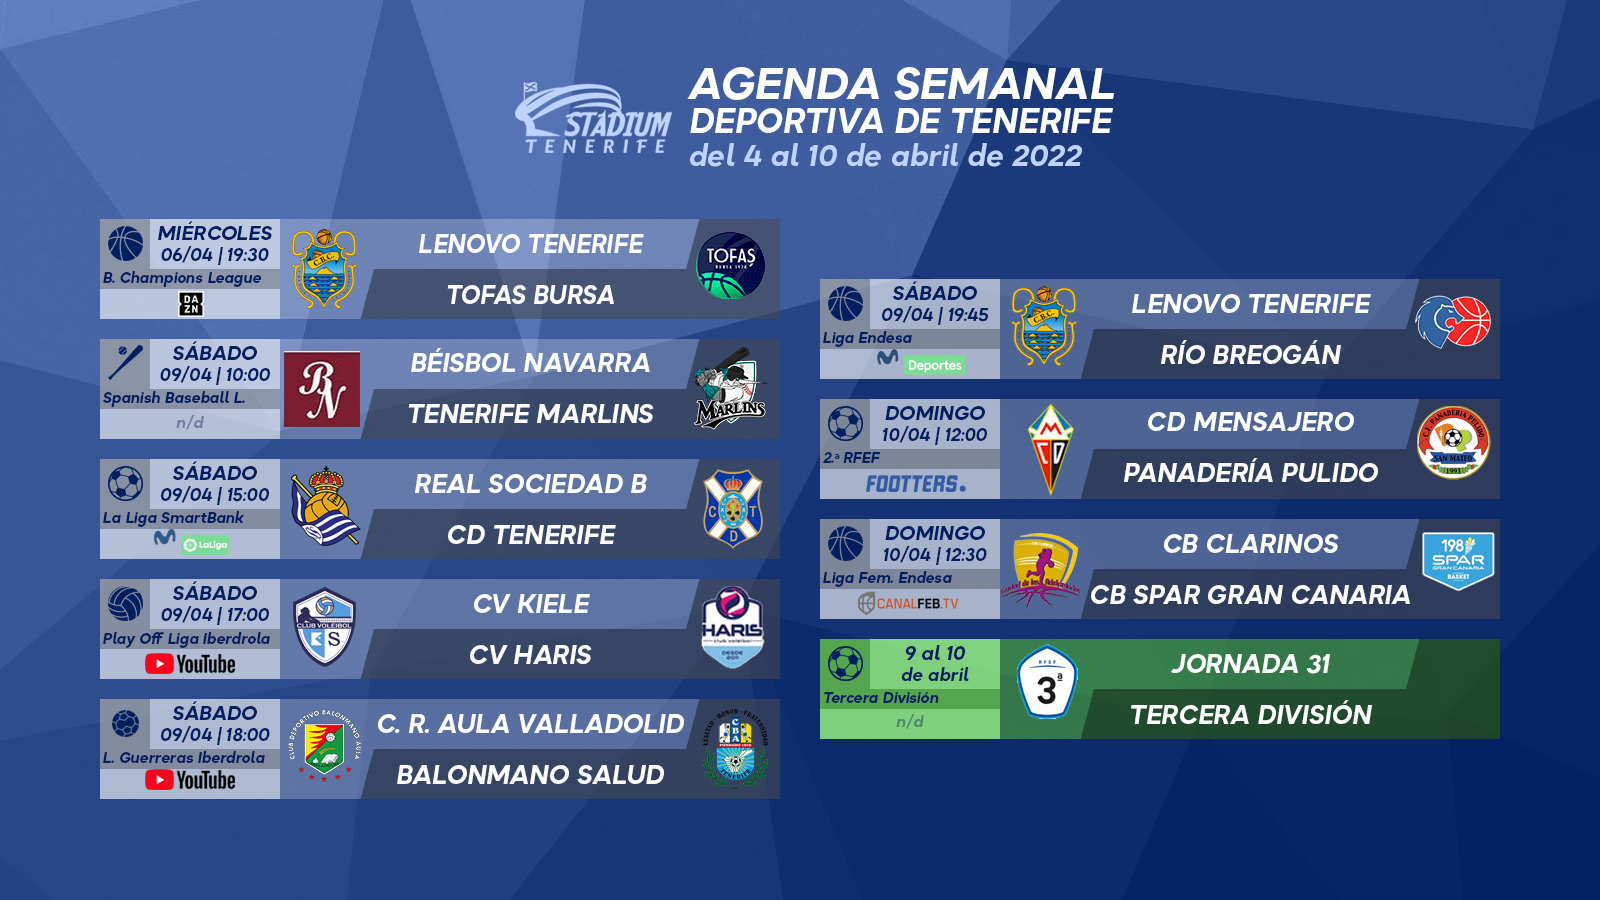 Agenda Semanal Deportiva de Tenerife (4 al 10 de abril)